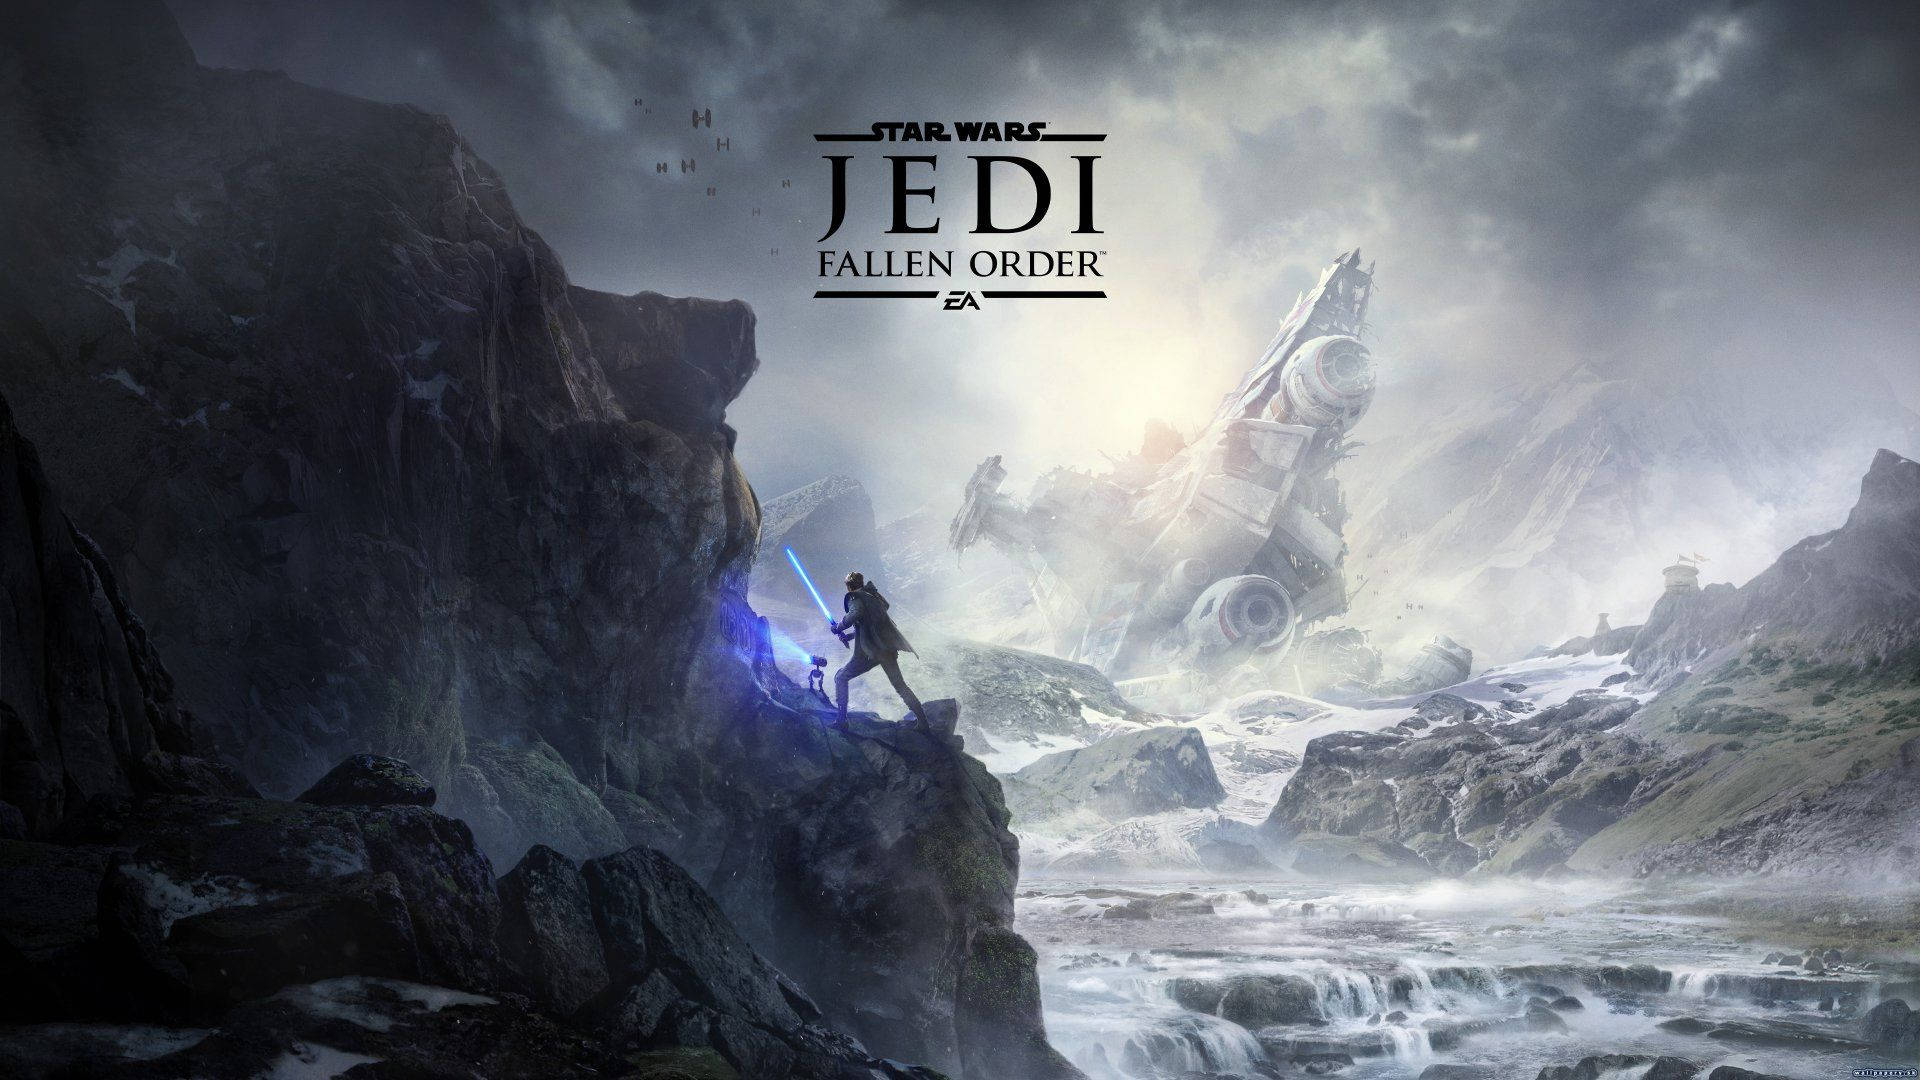 Top 999+ Star Wars Jedi Fallen Order Wallpaper Full HD, 4K✅Free to Use